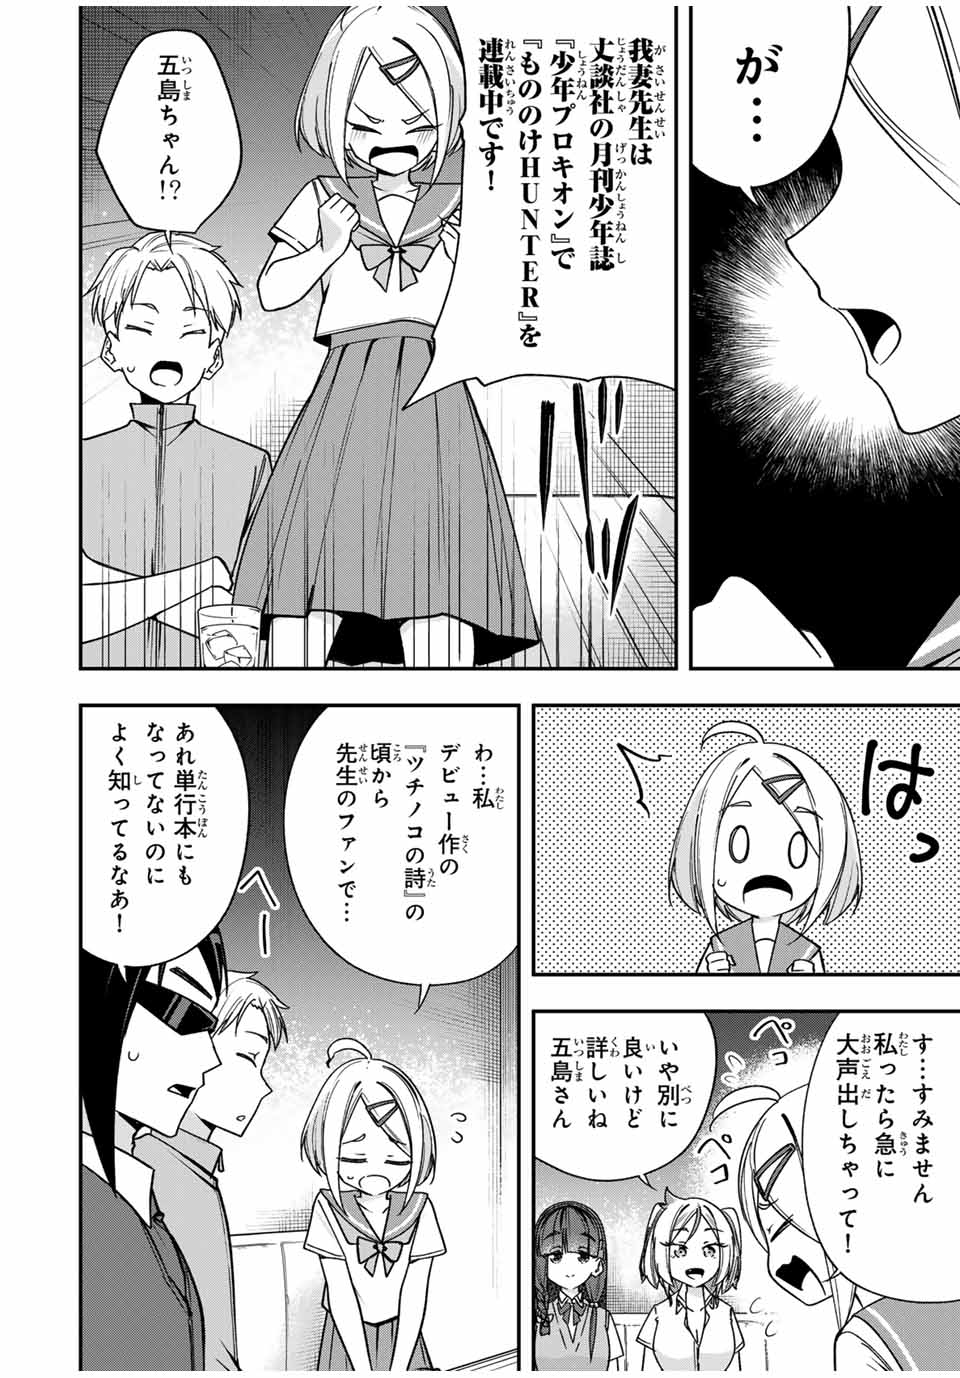 Heroine wa xx Okasegitai - Chapter 12 - Page 8